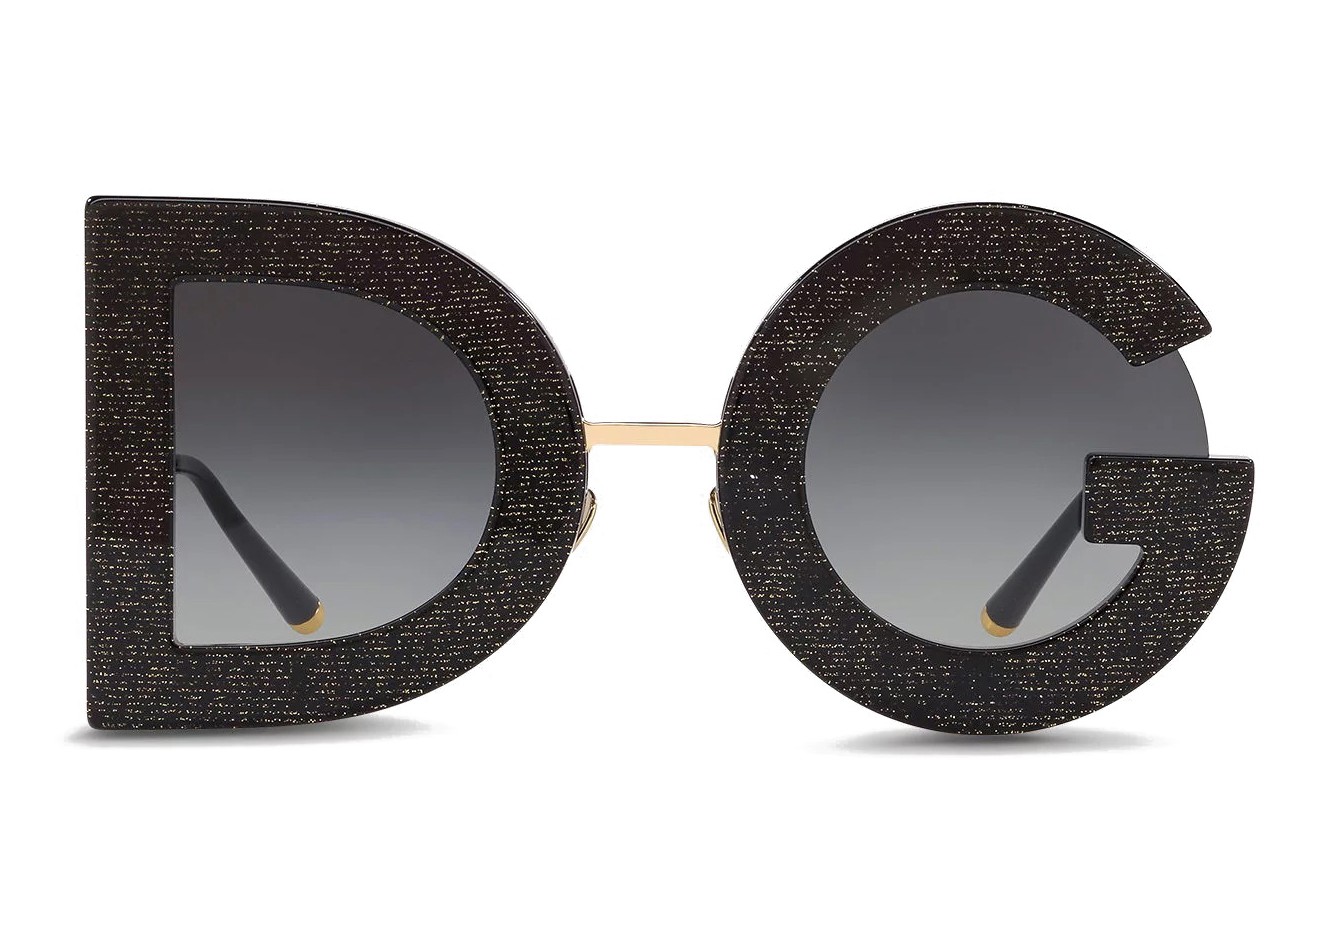 Dolce u0026 Gabbana - DG Glitter Sunglasses - Black u0026 Gold - Dolce u0026 Gabbana  Eyewear - Avvenice